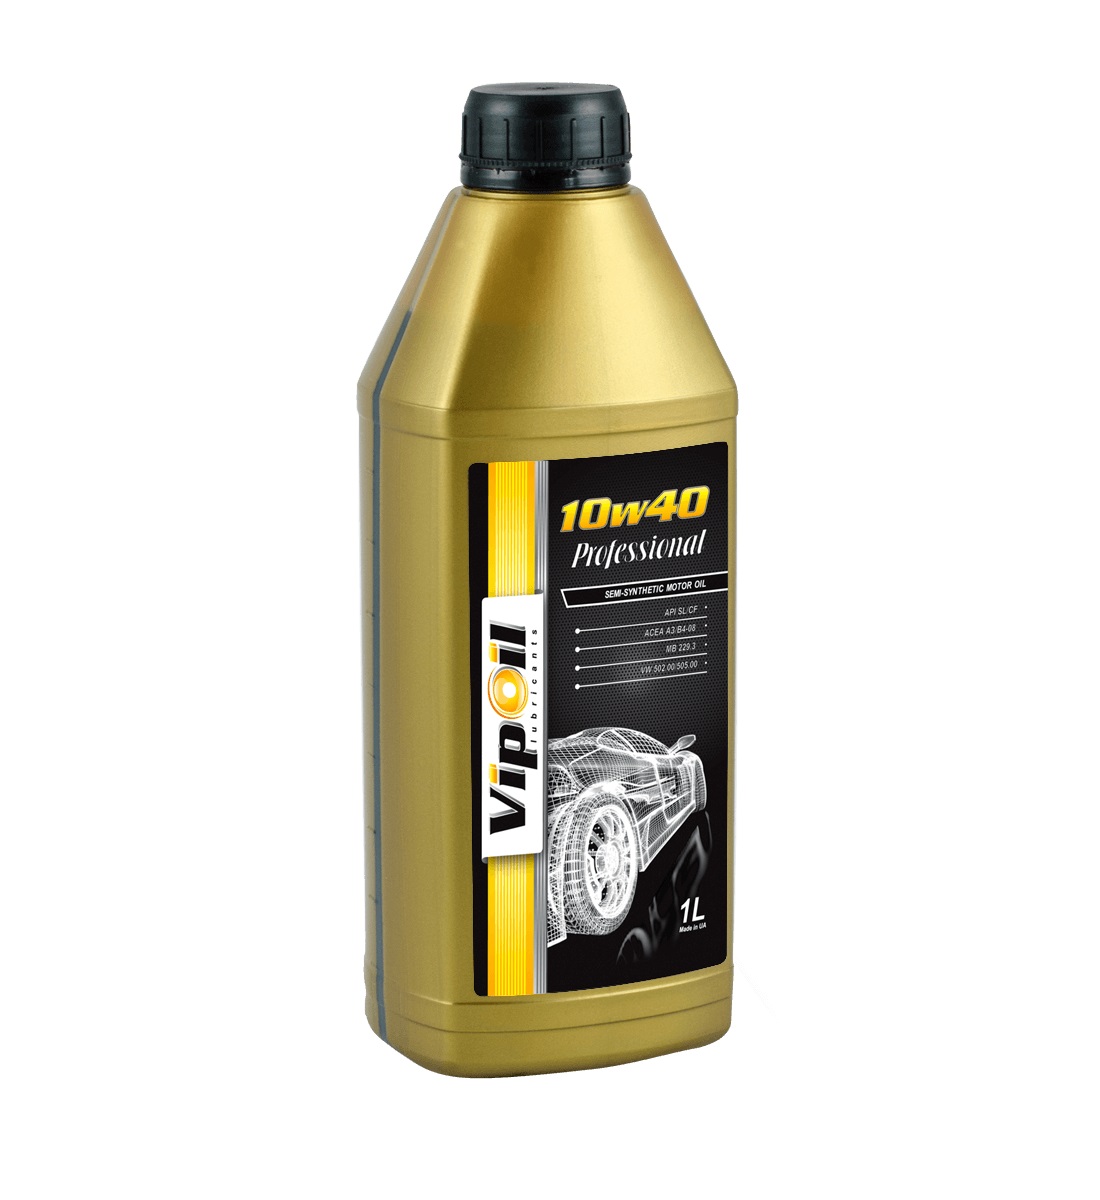  Купить Моторное масло Professional 10W-40 SL/CF 1лVIP OIL 0162816   